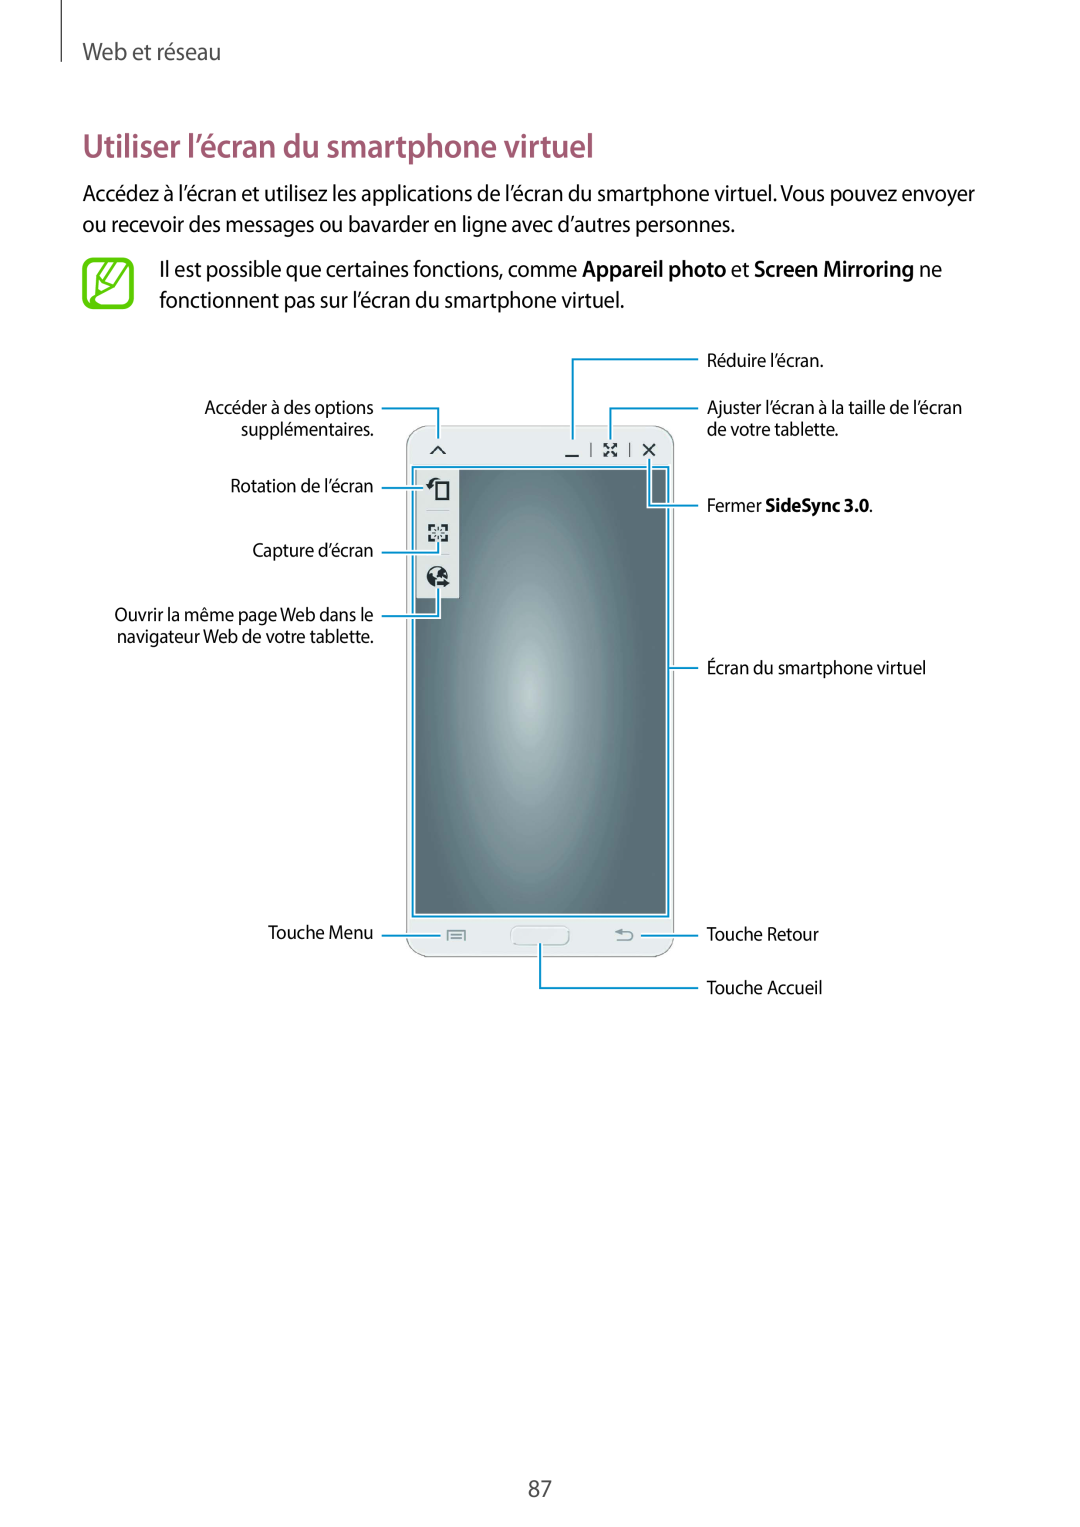 Samsung SM-T320NZKAXEF, SM-T320XZWAXEF manual Utiliser l’écran du smartphone virtuel, Web et réseau, Fermer SideSync 